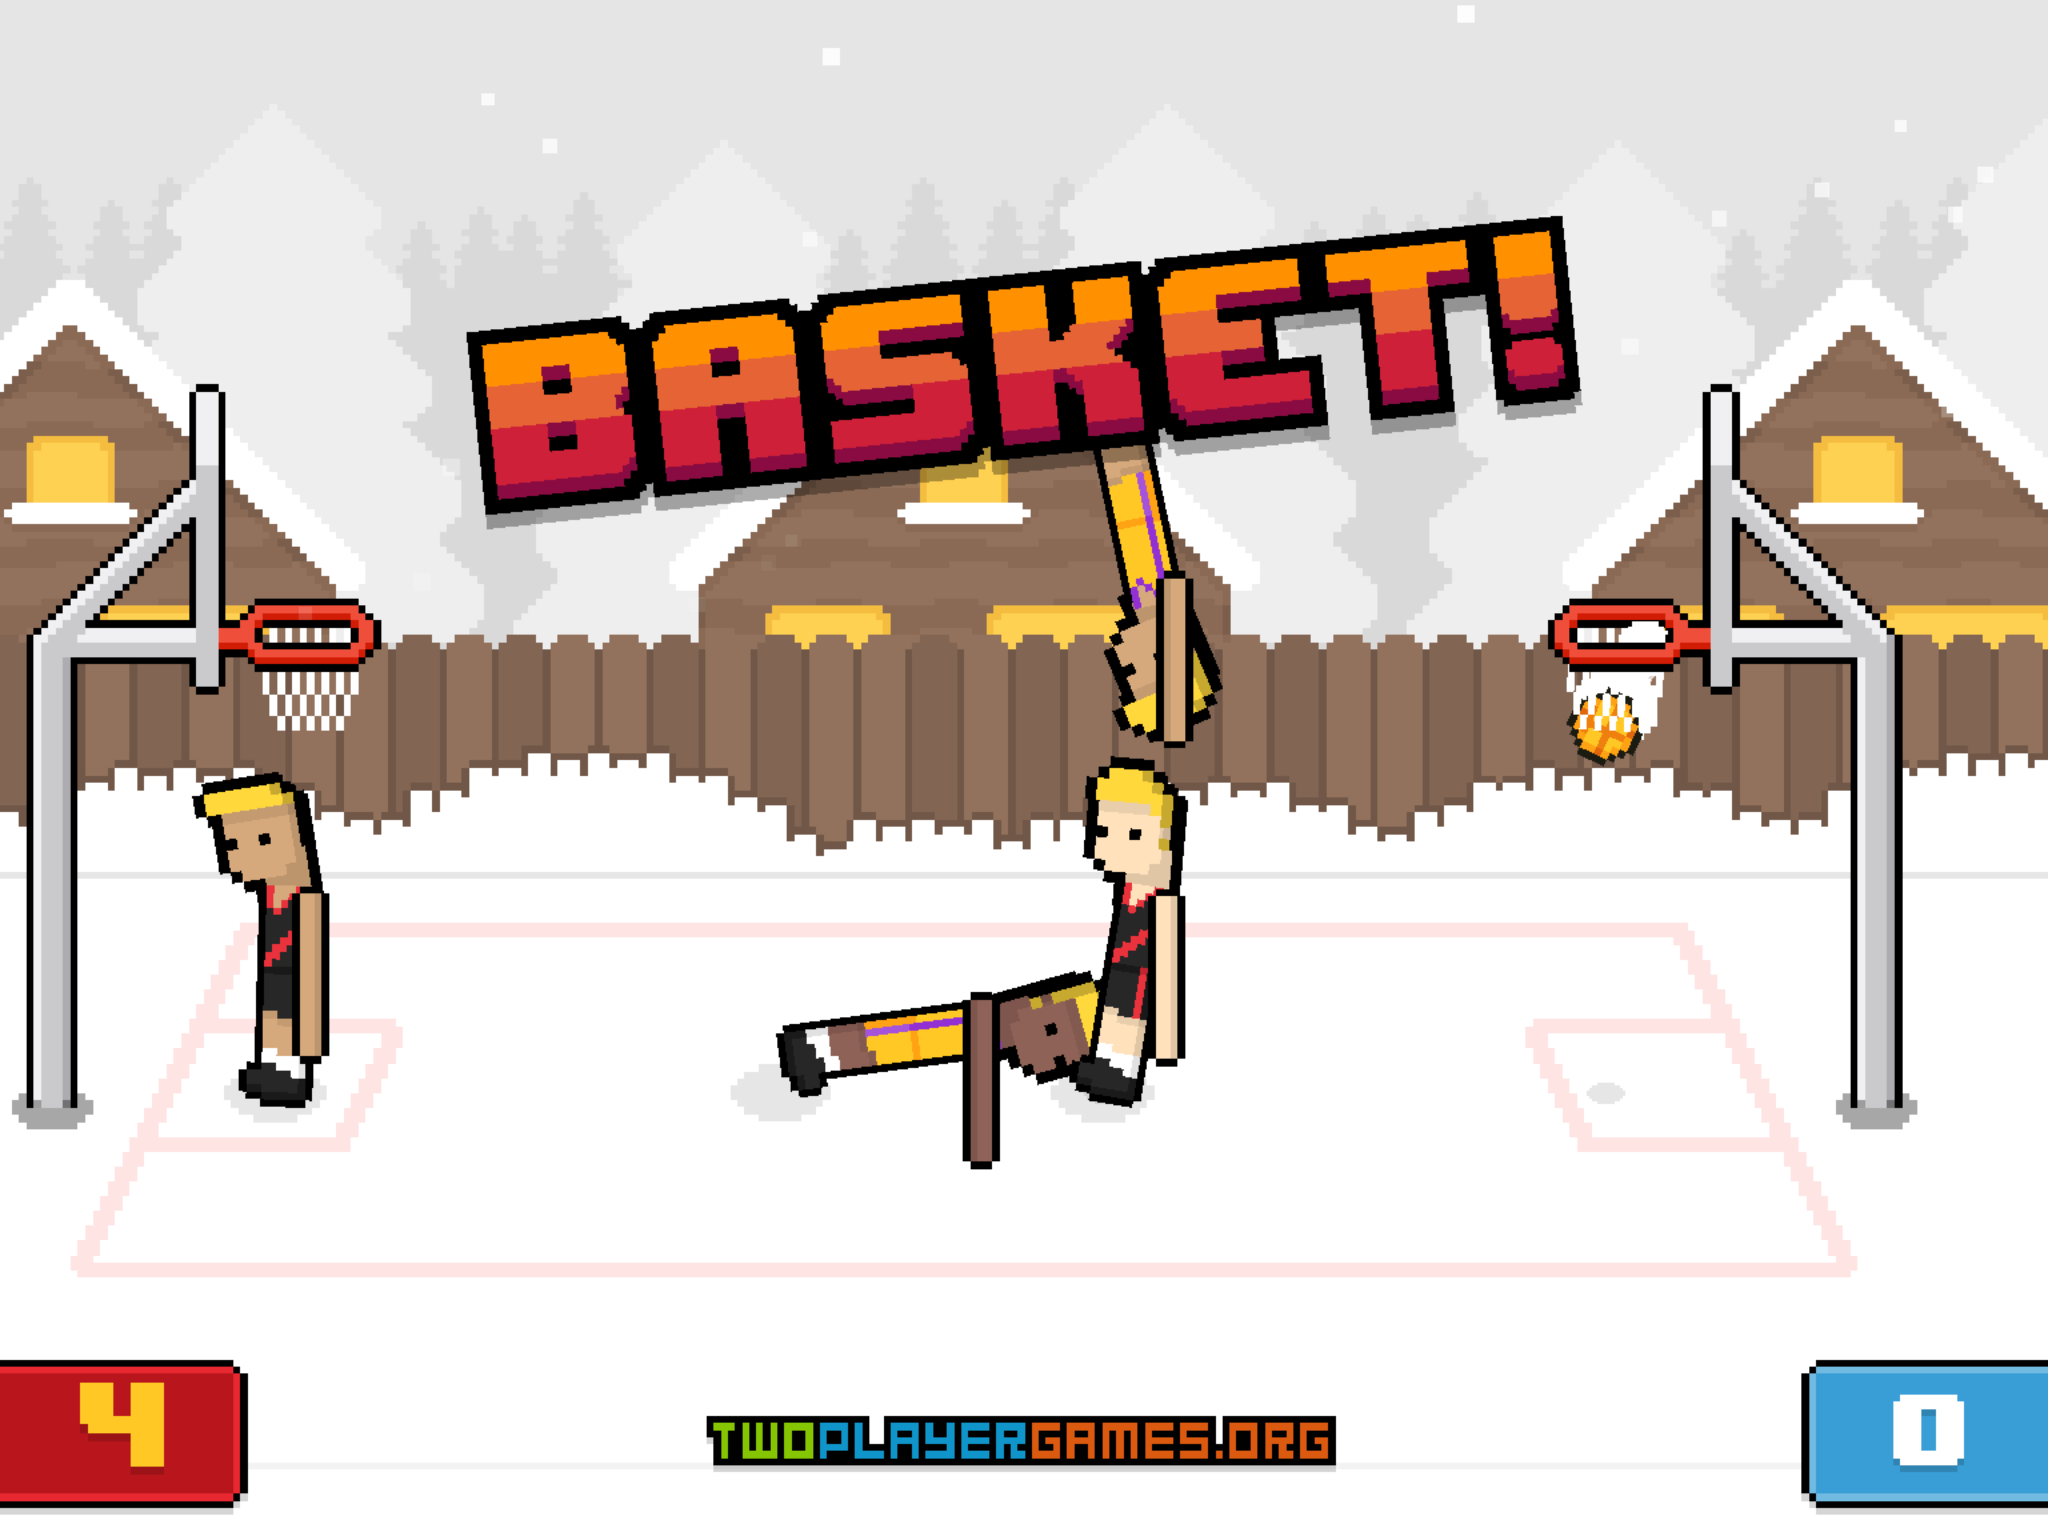 Basket Random for Android - Free App Download